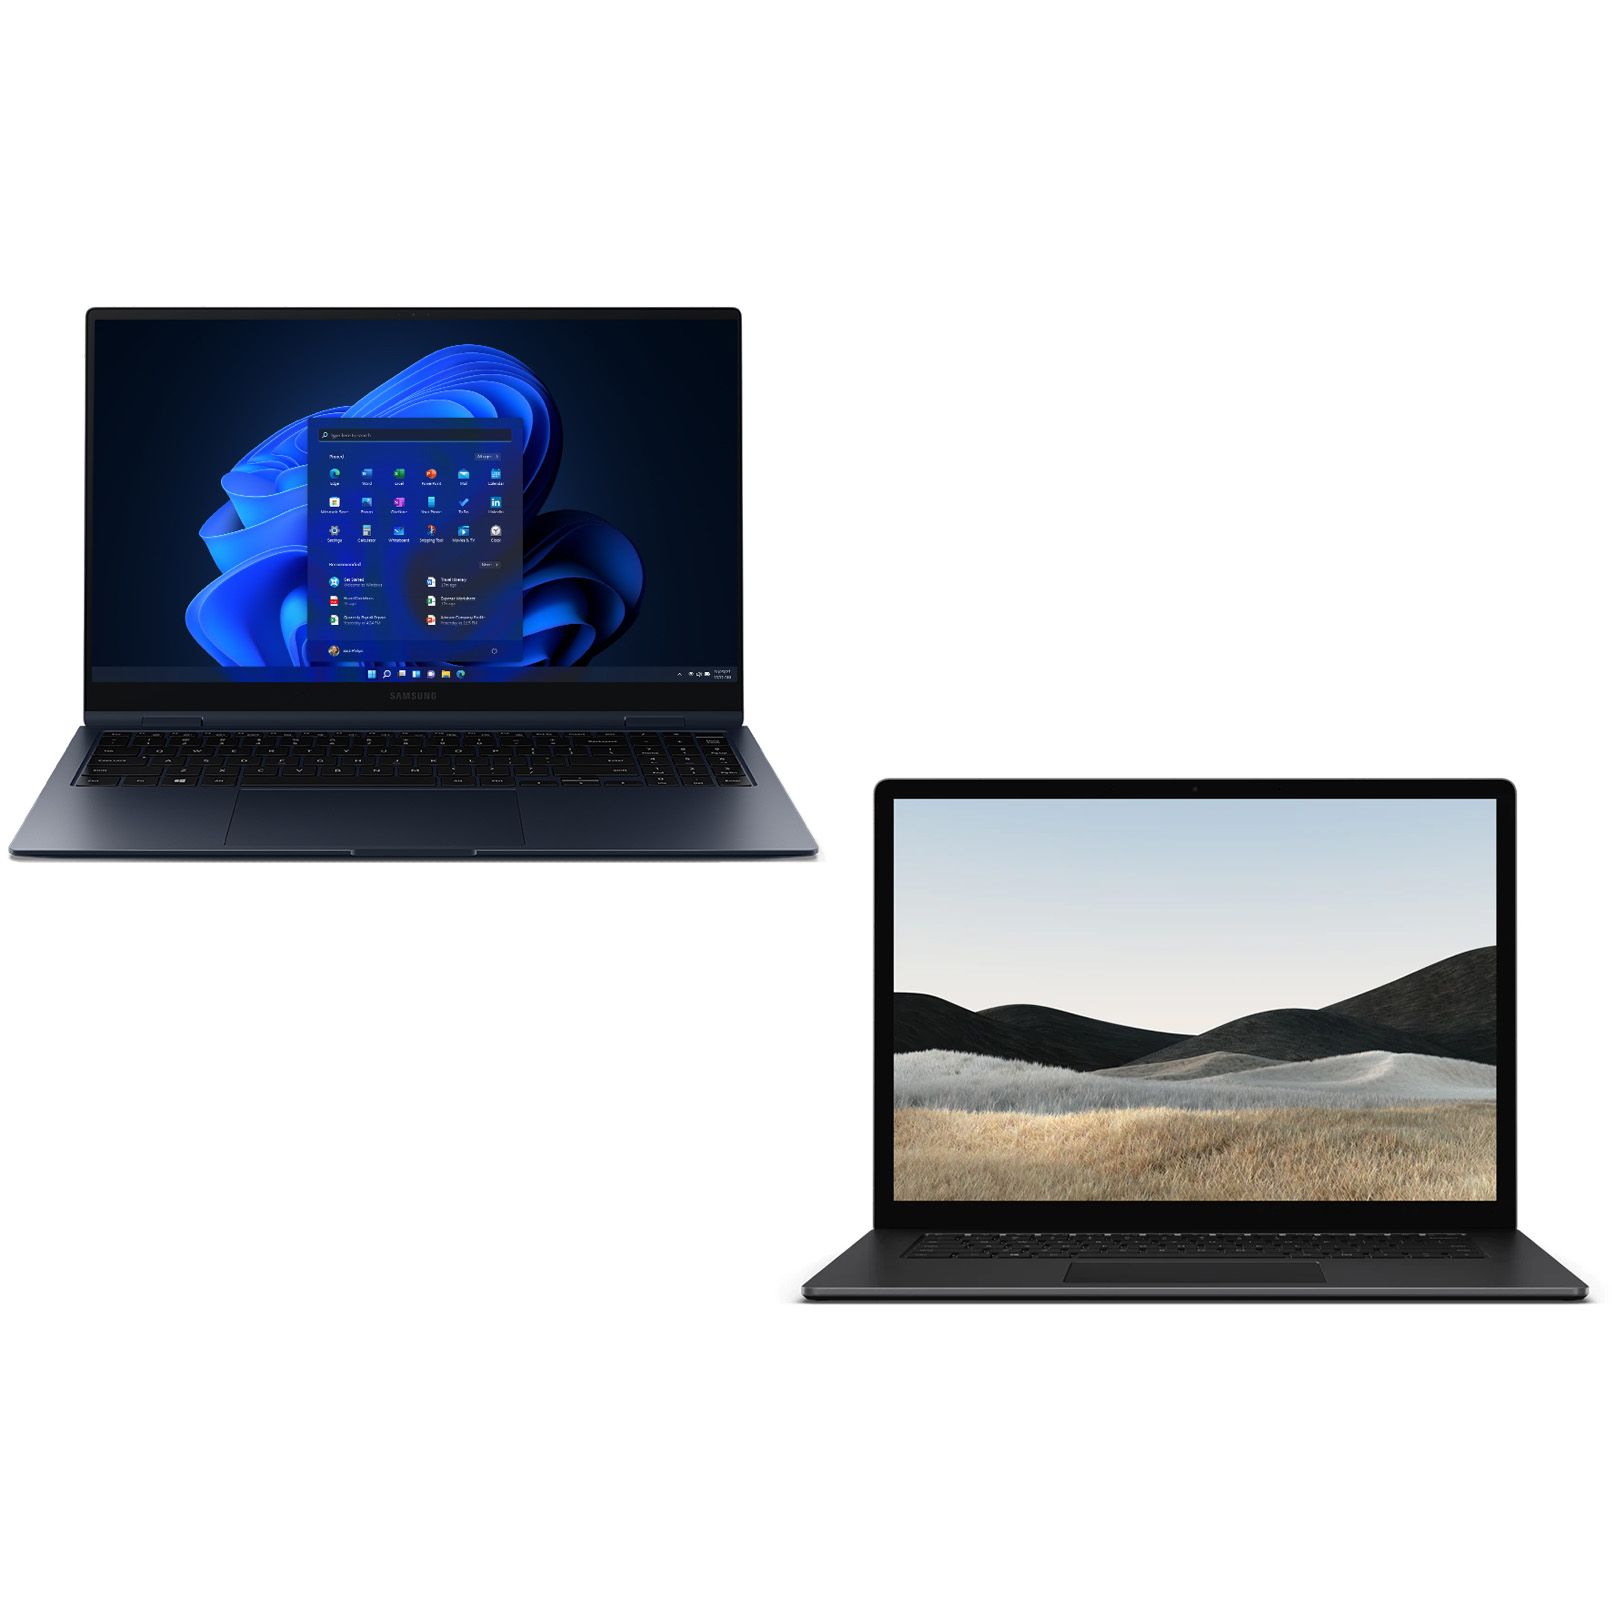 Microsoft Surface Laptop 4 and Samsung Galaxy Book Pro 360 Thumbnail